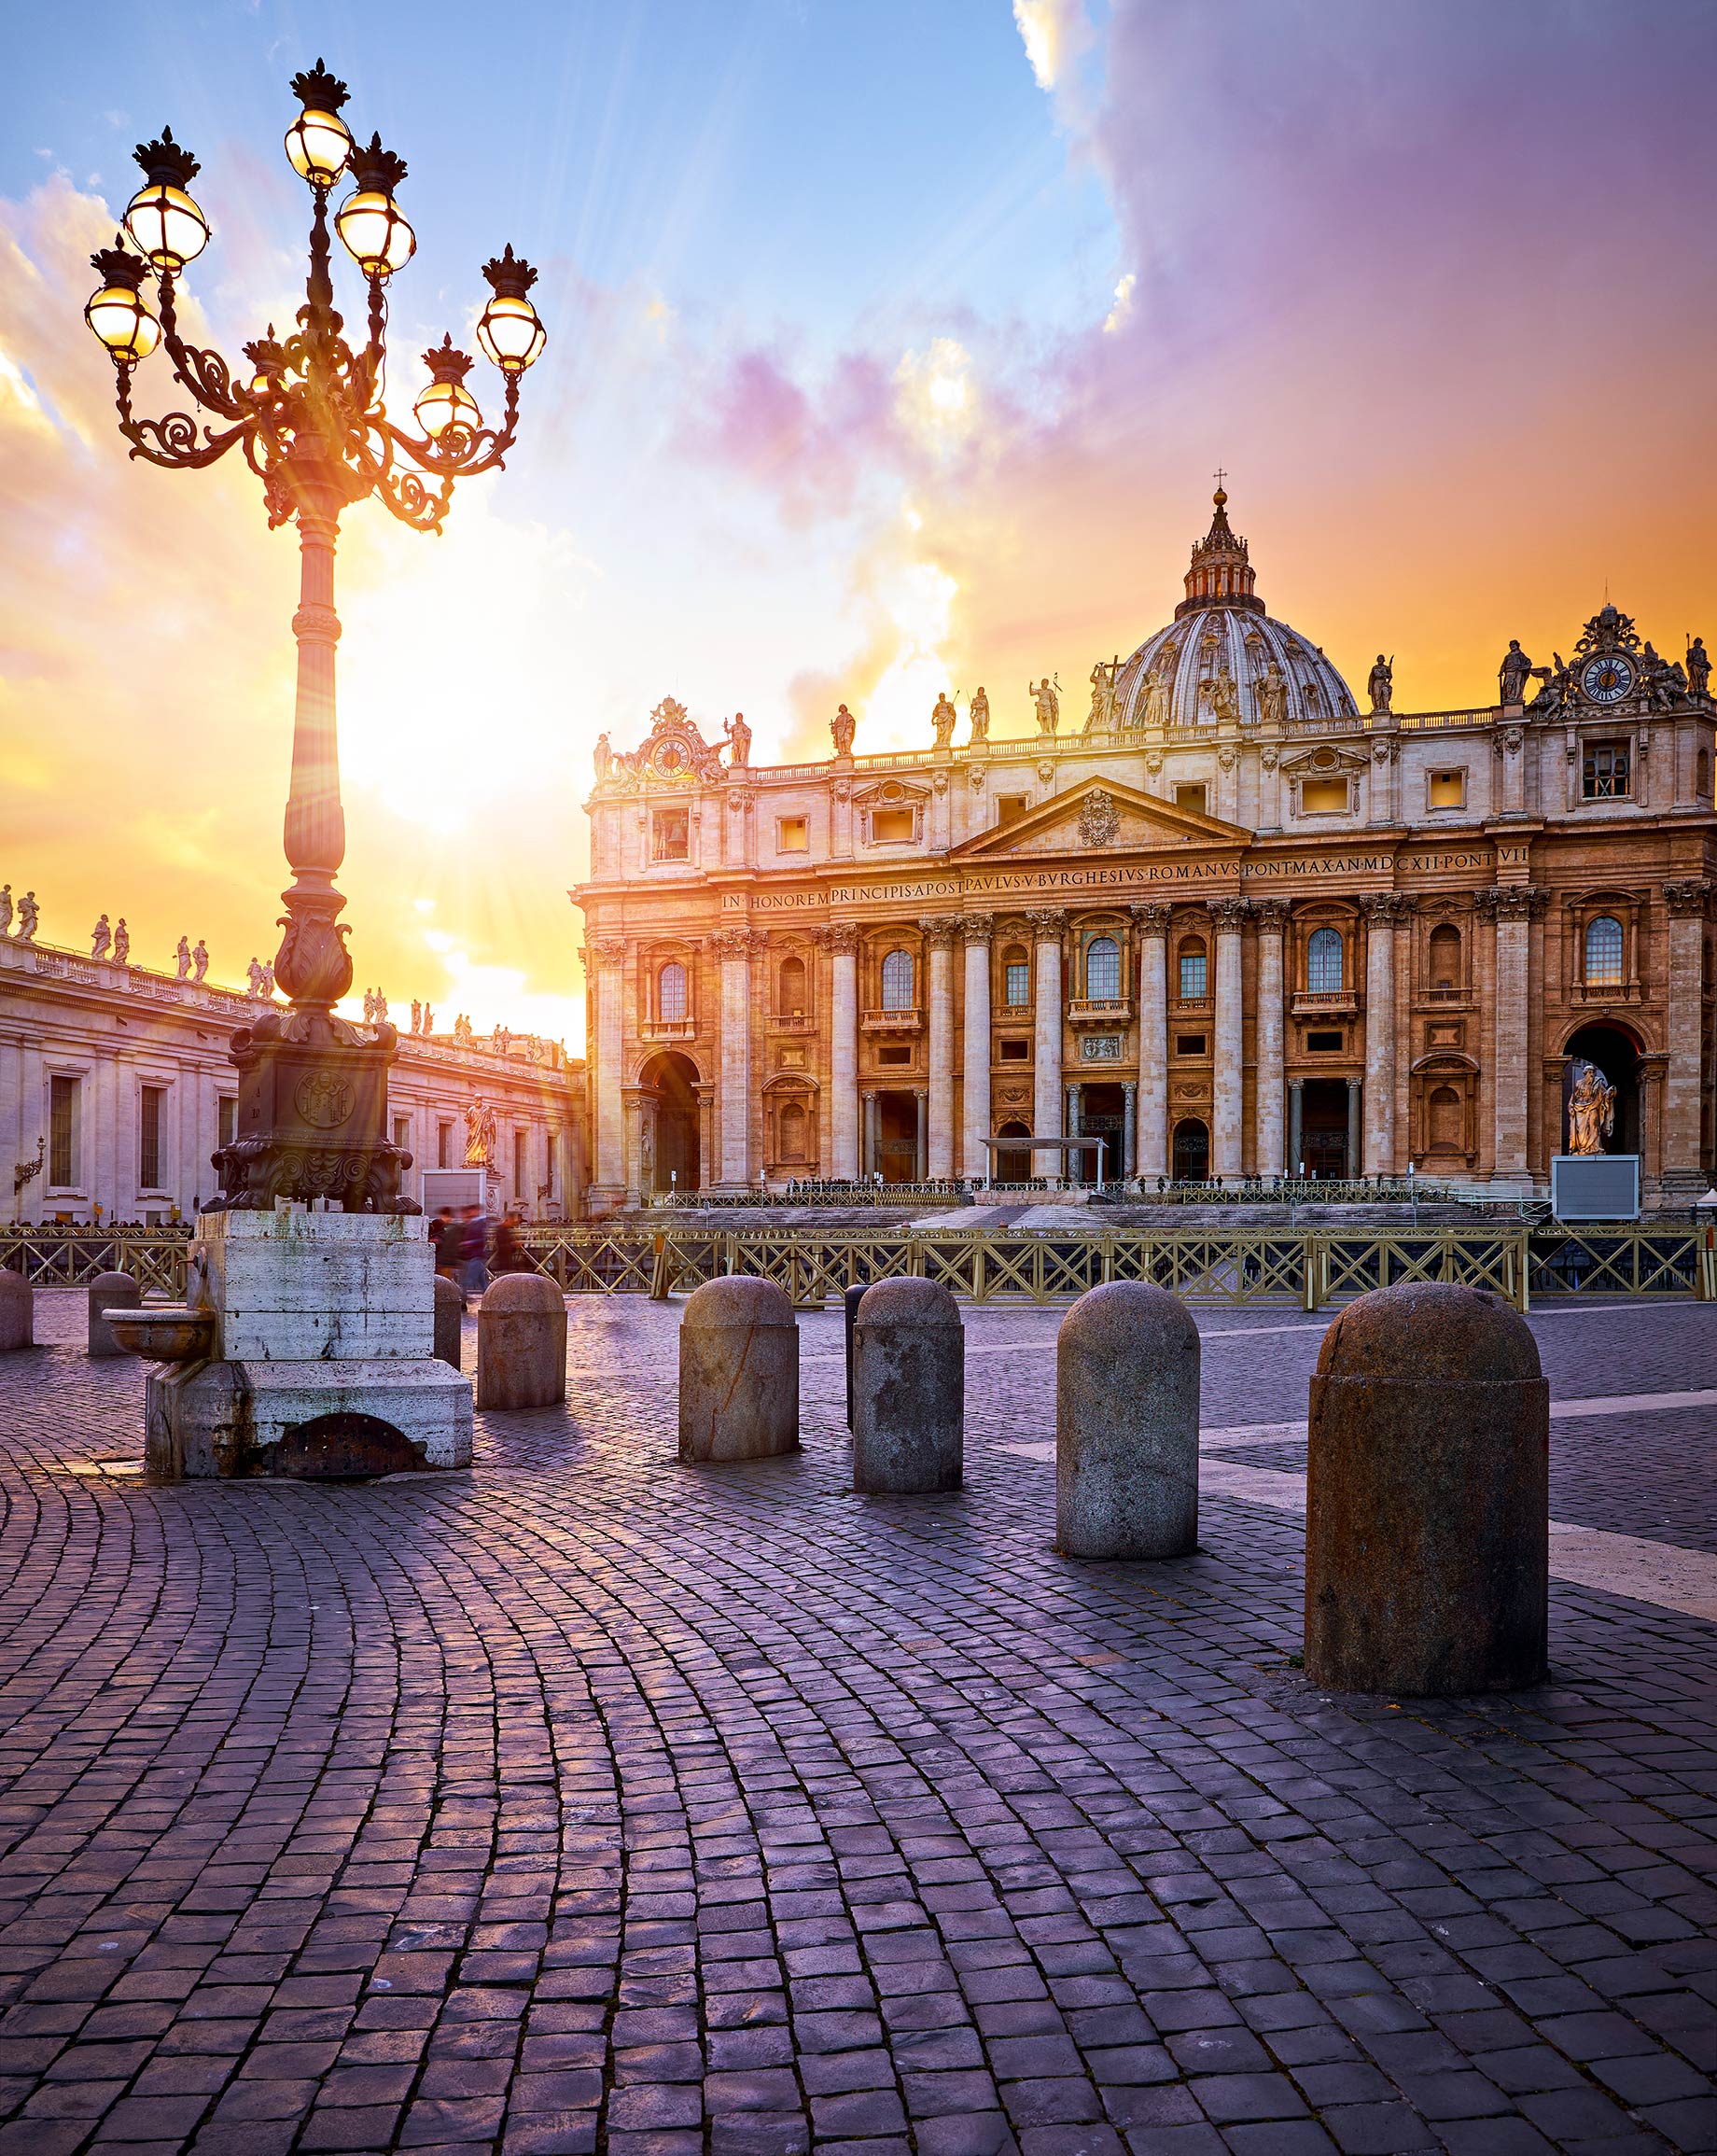 Saint Peter's Square - Vatican City State